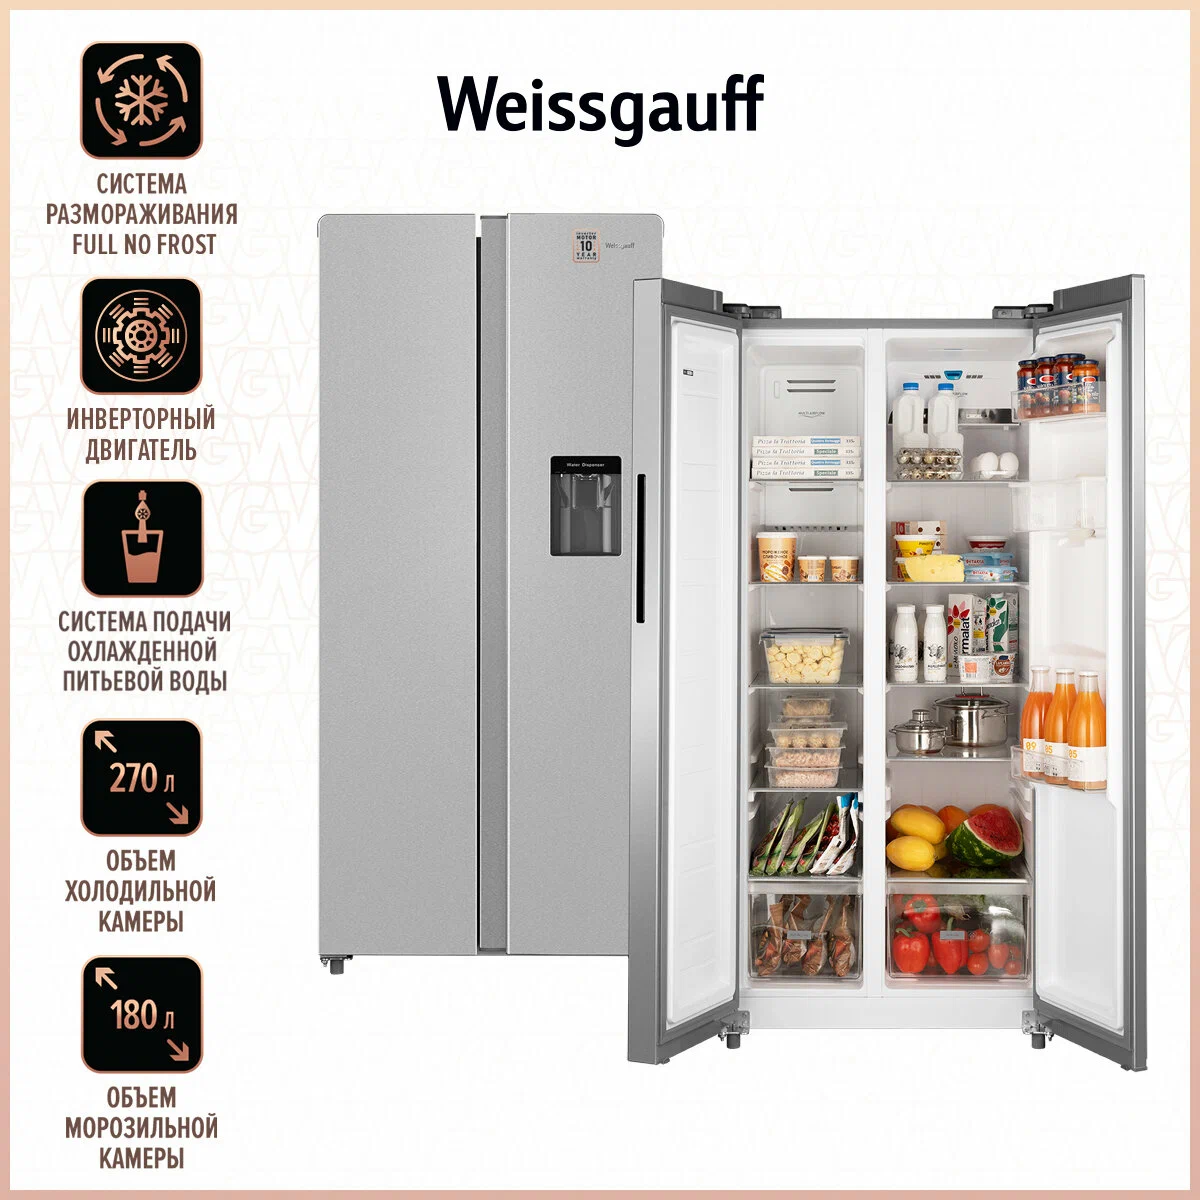 Холодильник Weissgauff WSBS 600 X серебристый холодильник weissgauff wcd 450 x серебристый